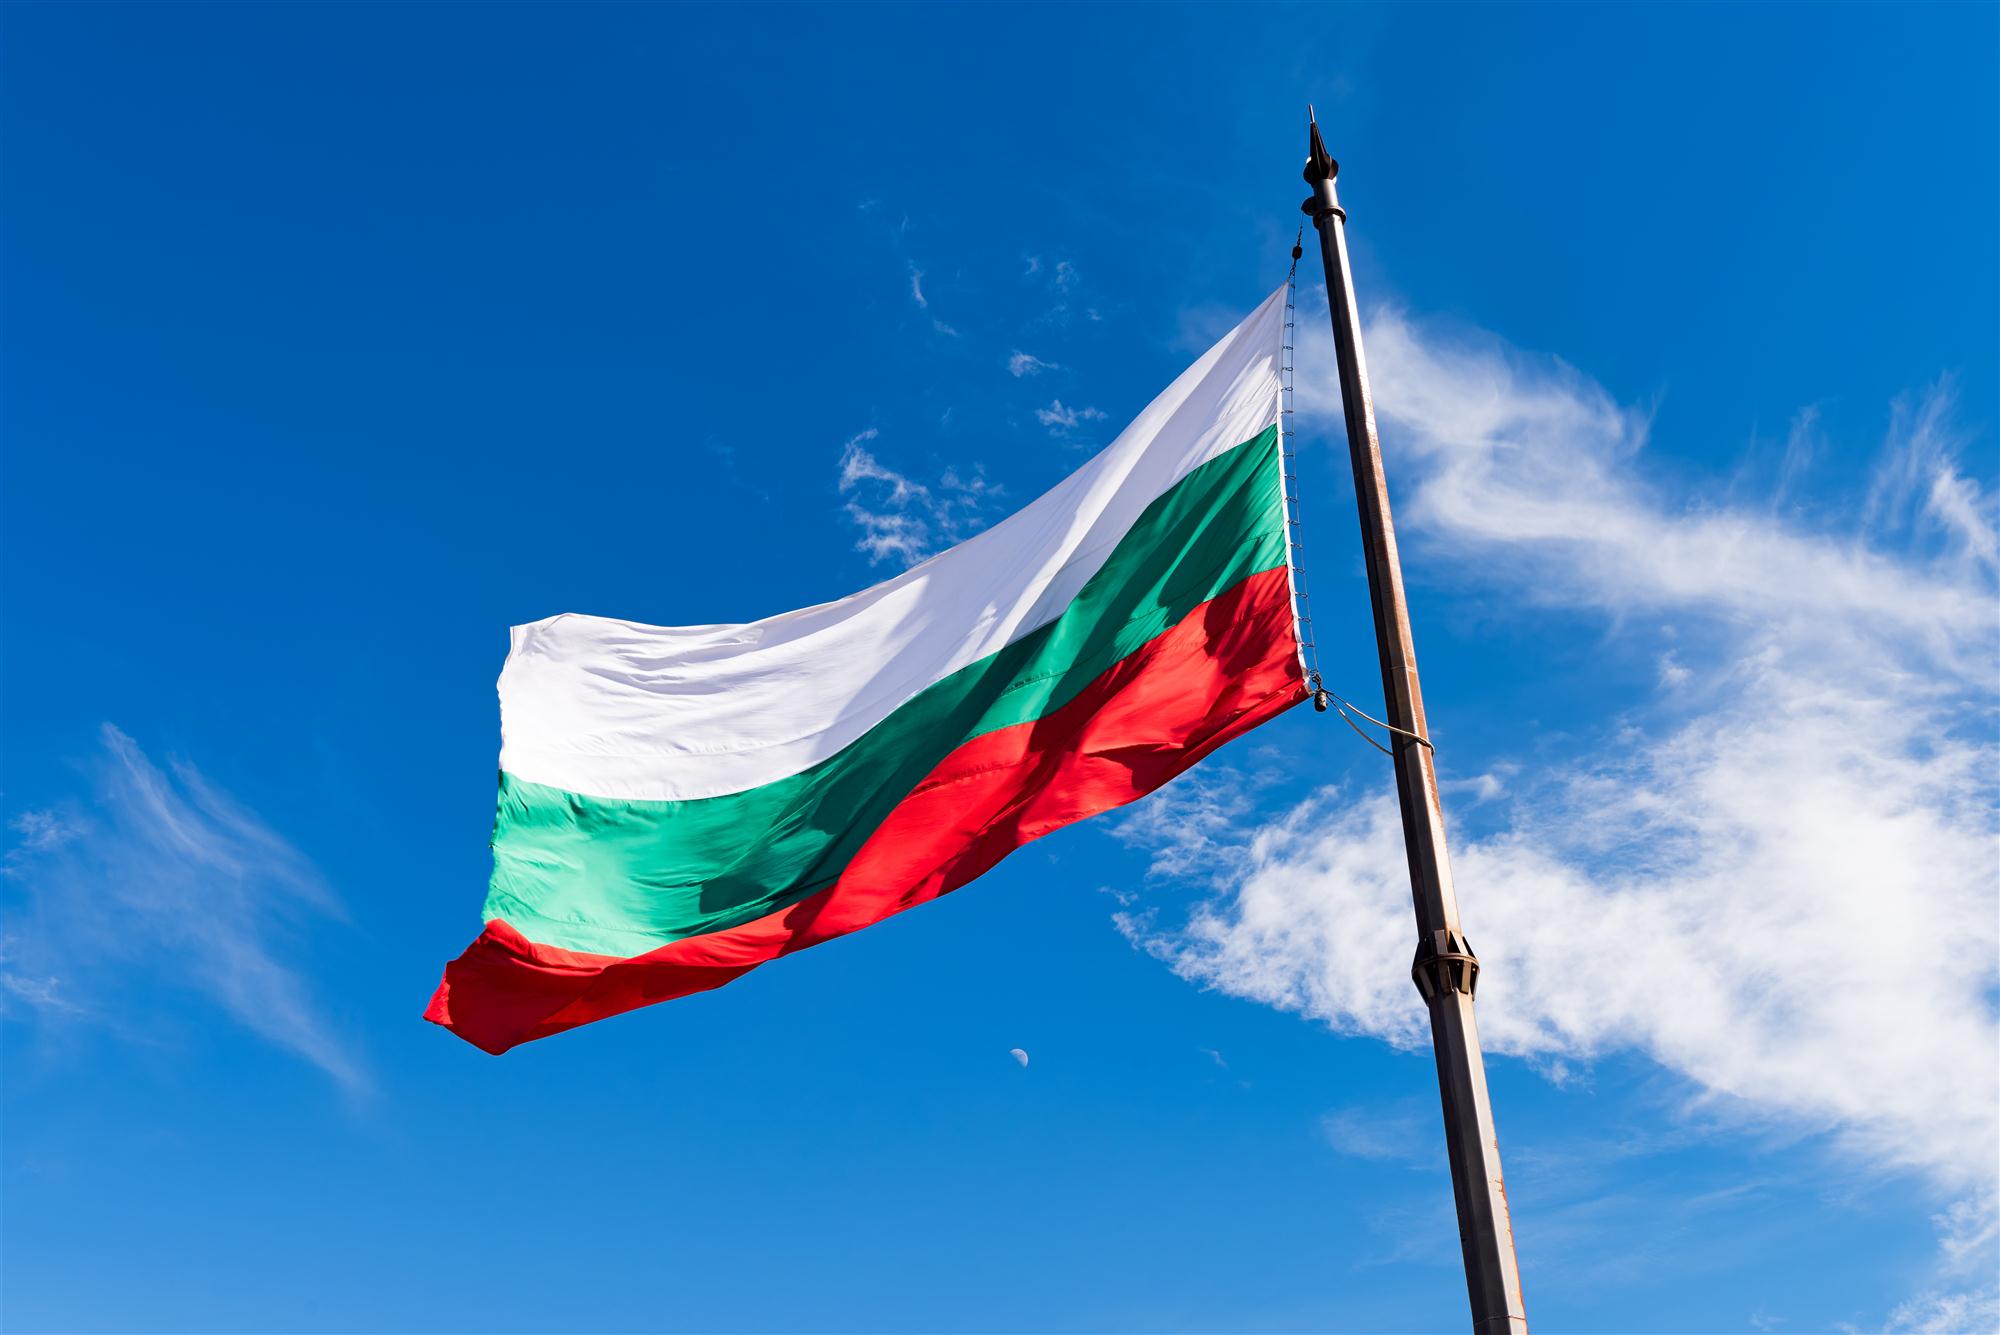 Self Photos / Files - Bulgaria flag iStock-846522738